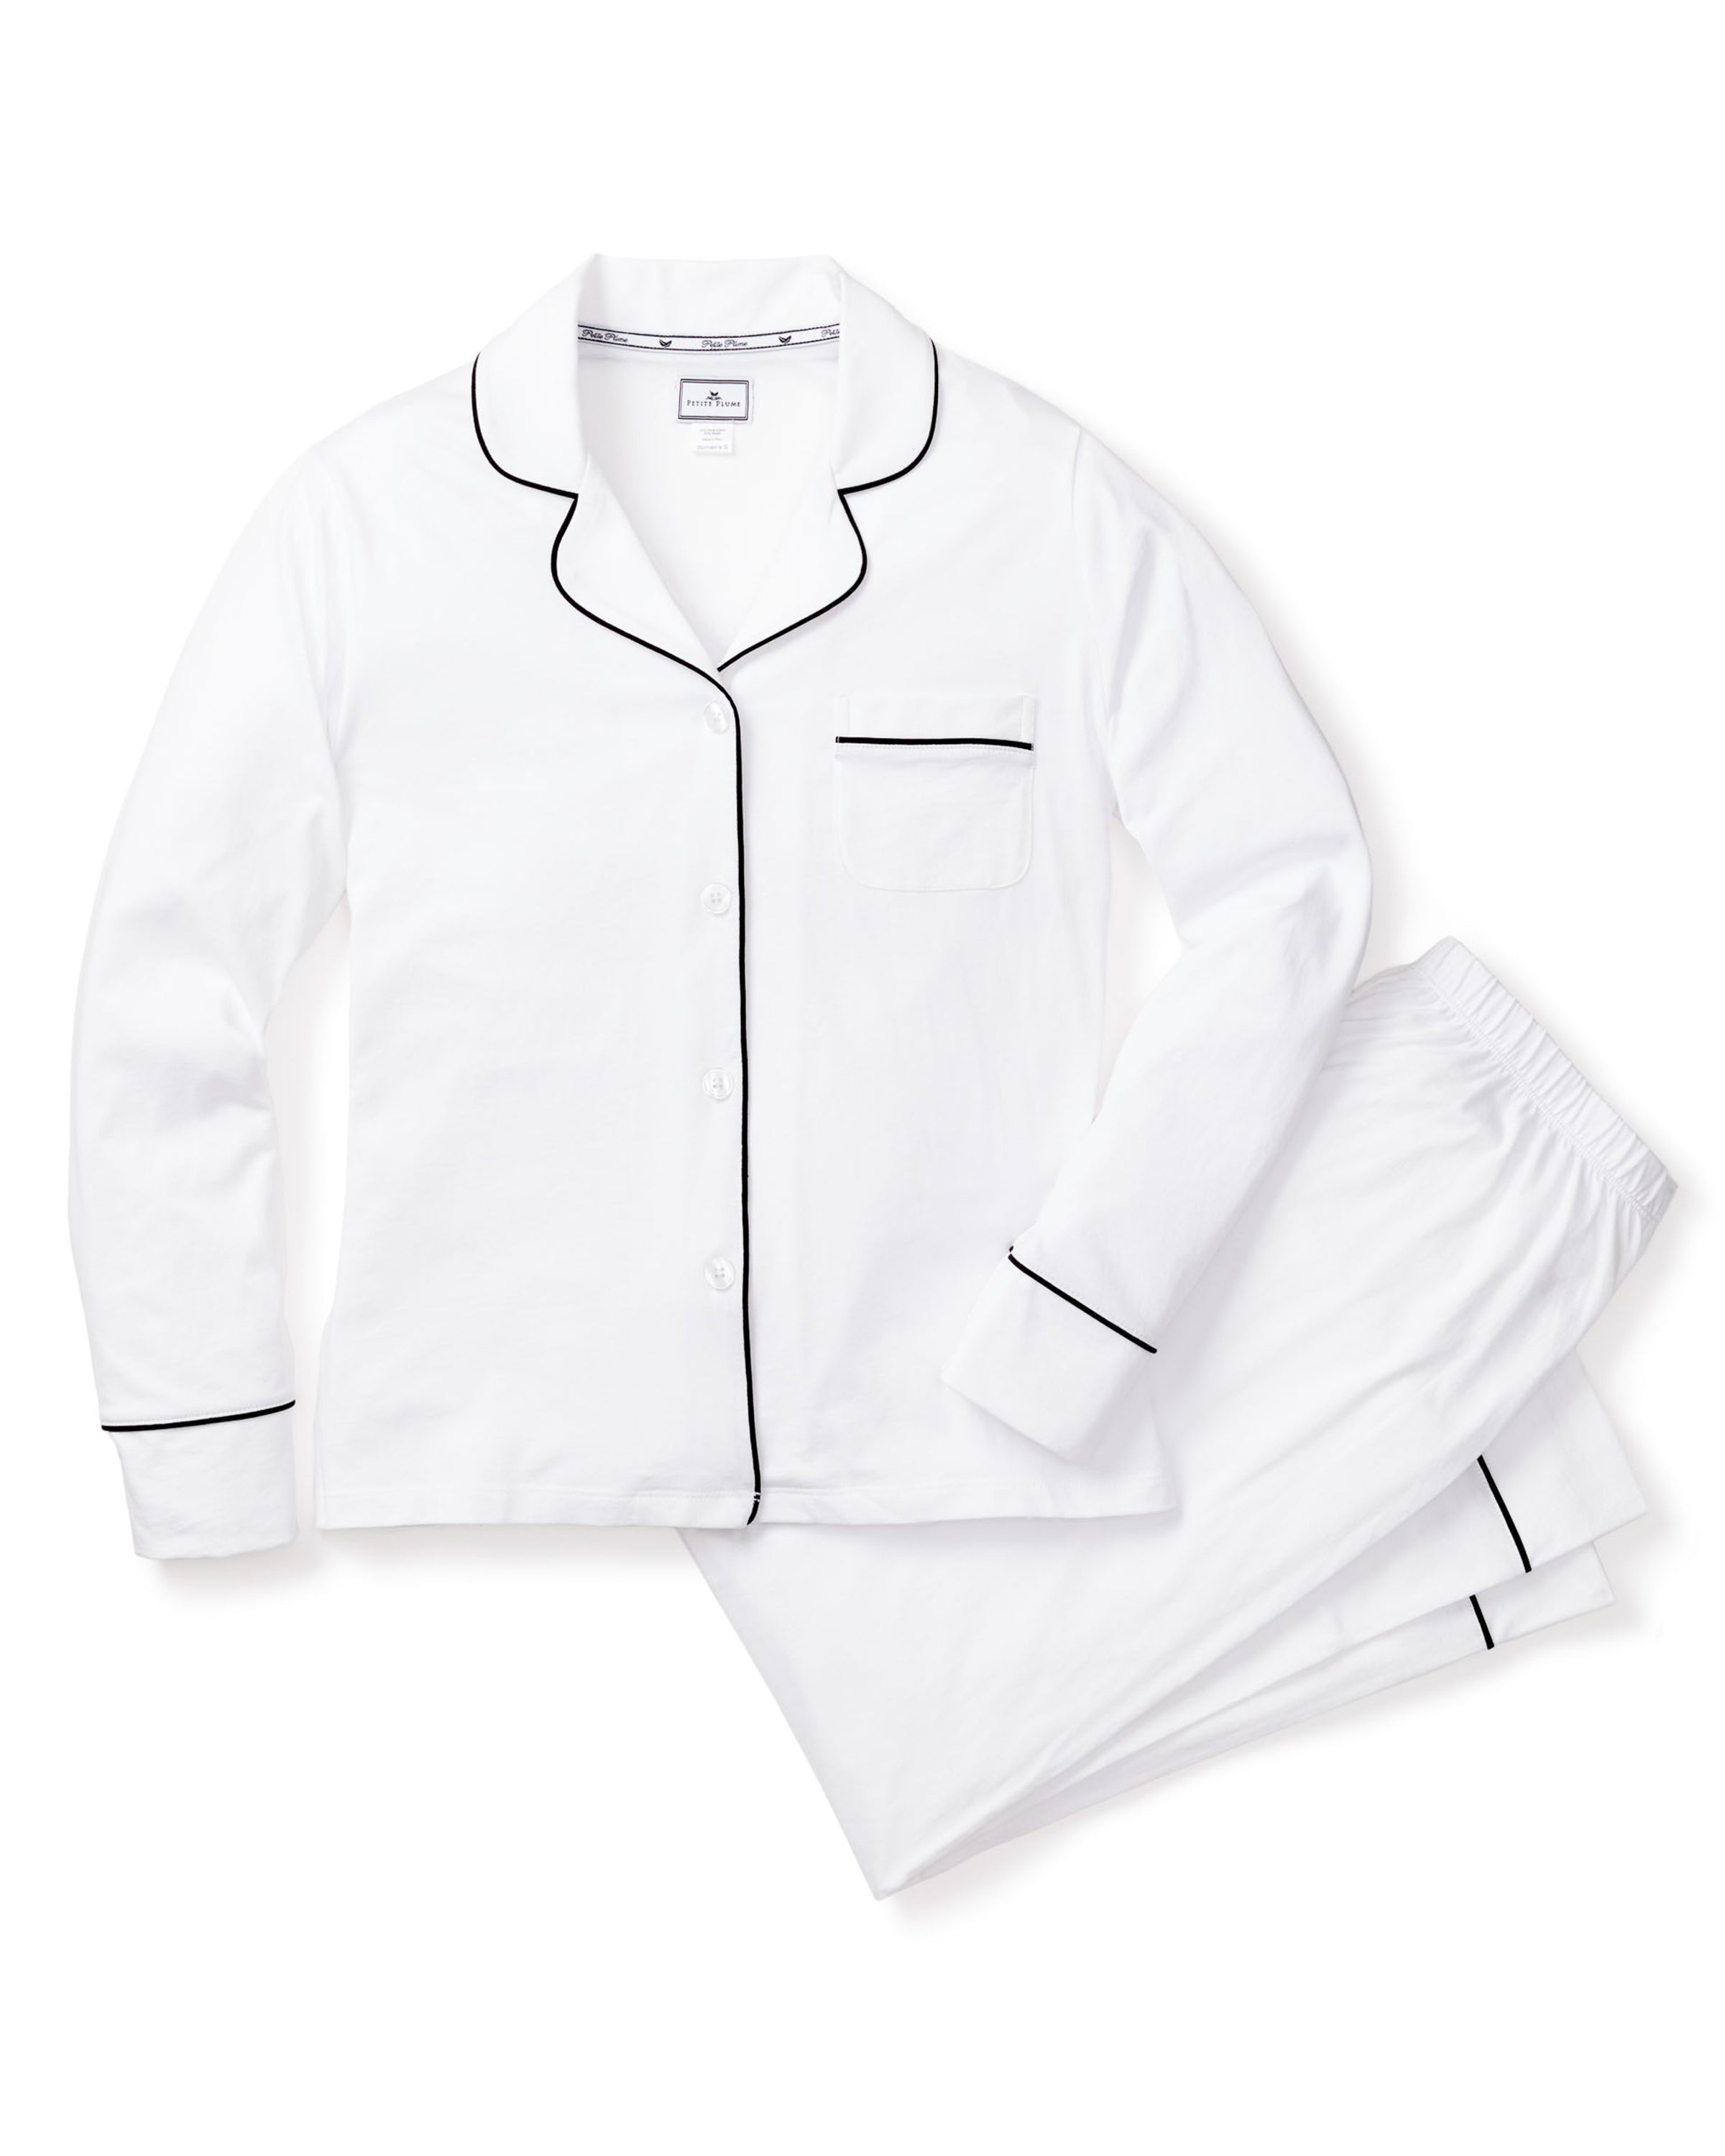 Women's Pima Pajama Set in White with Black Piping